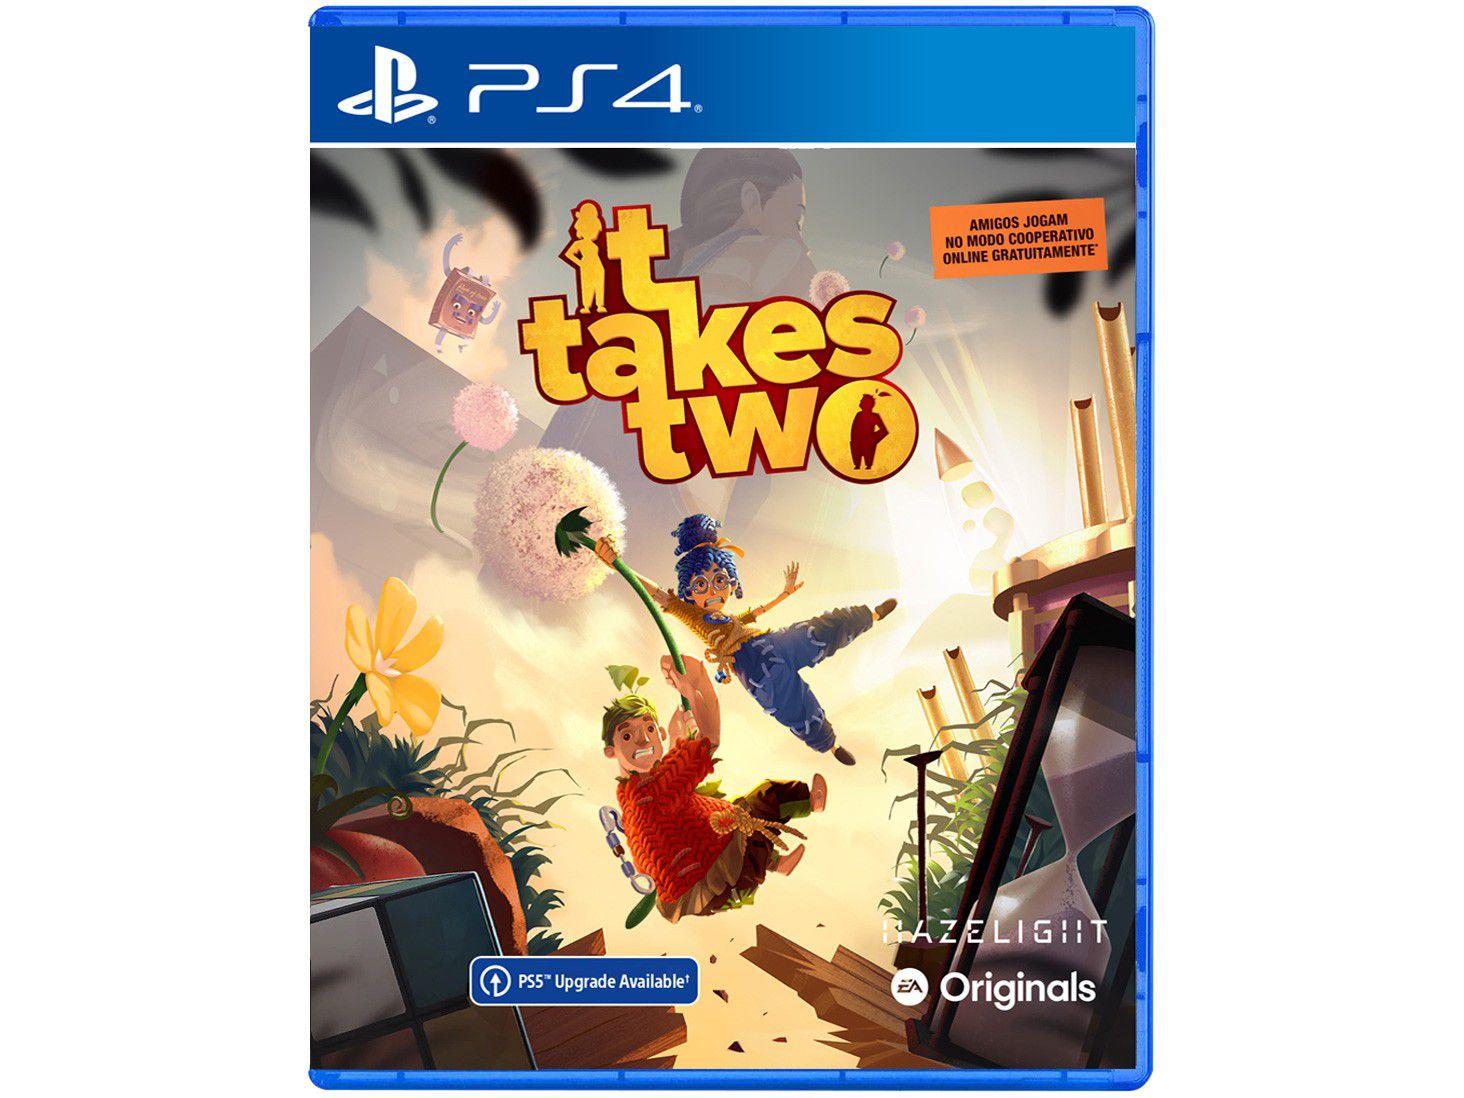 Jogo It Takes Two para PS4 e PS5 Via Upgrade - Digital Hazelight